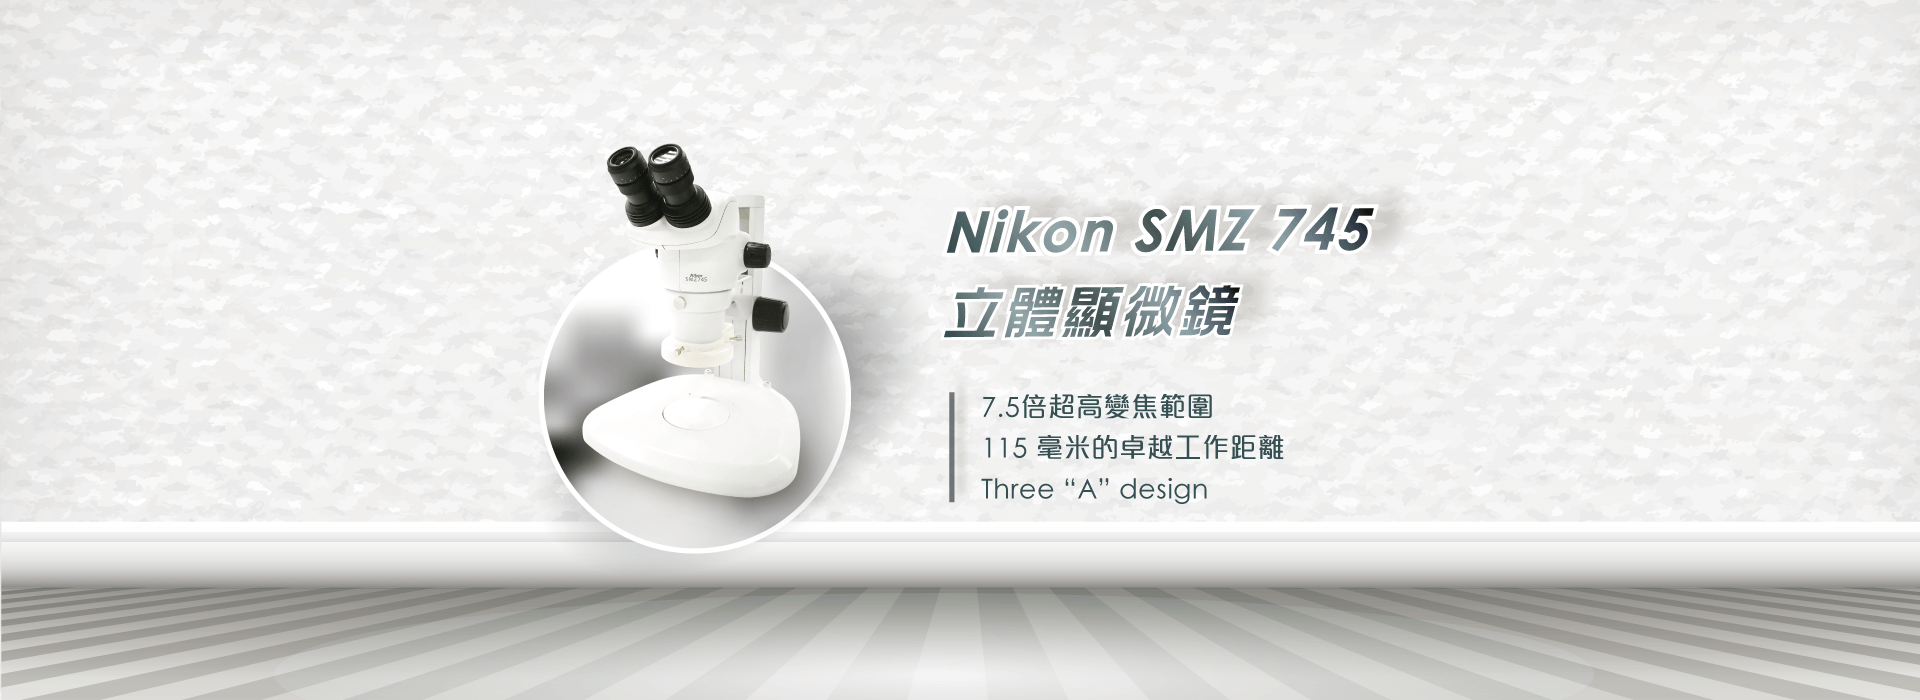 Nikon SMZ 745